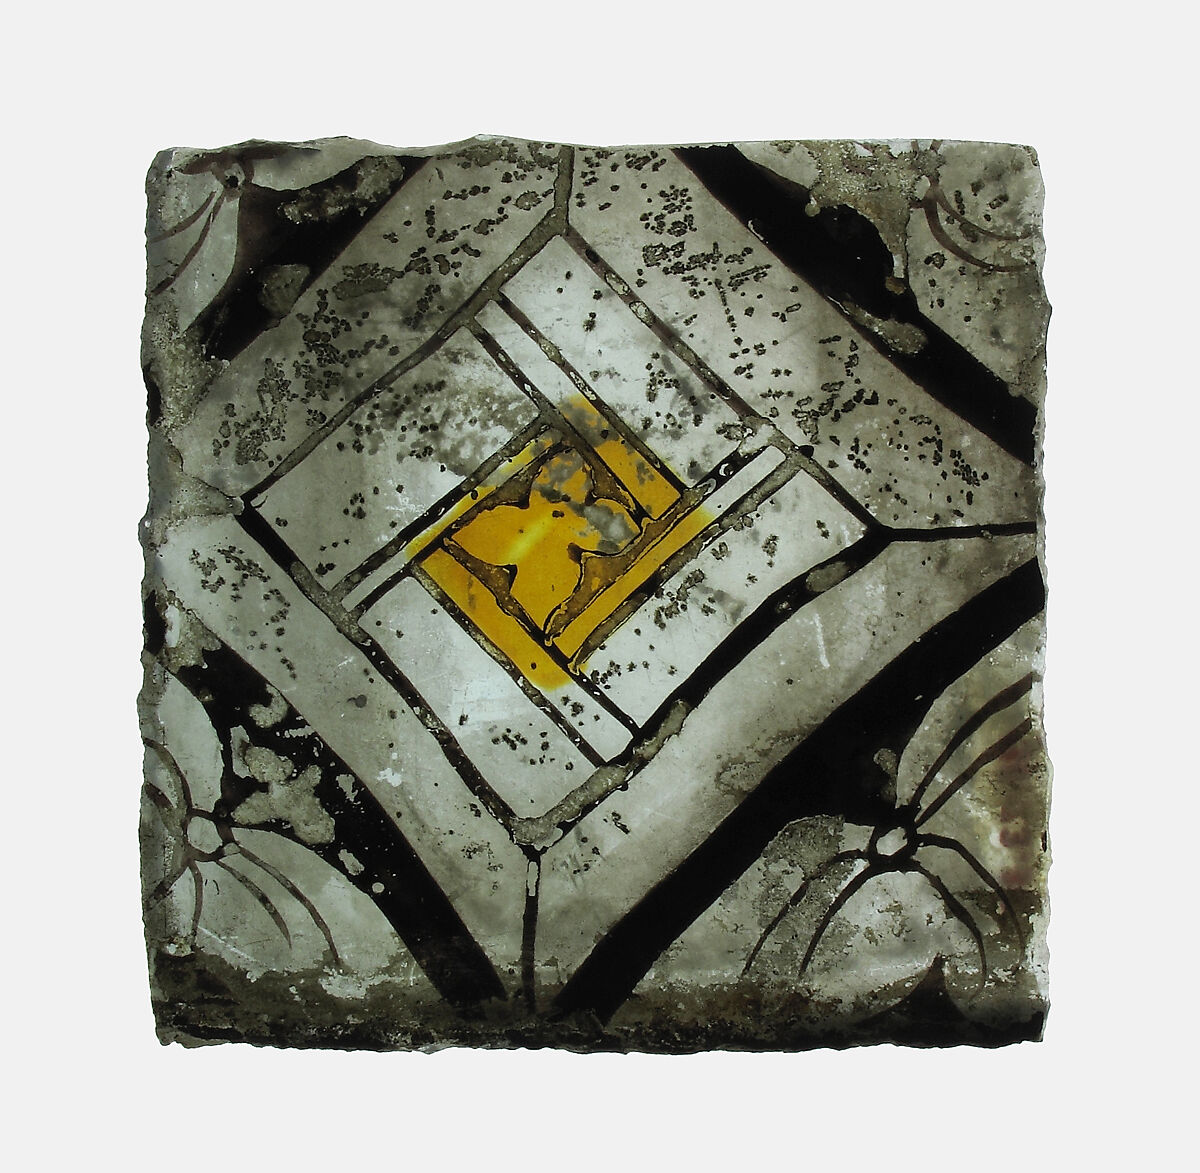 Glass Fragment, Colorless glass, European 